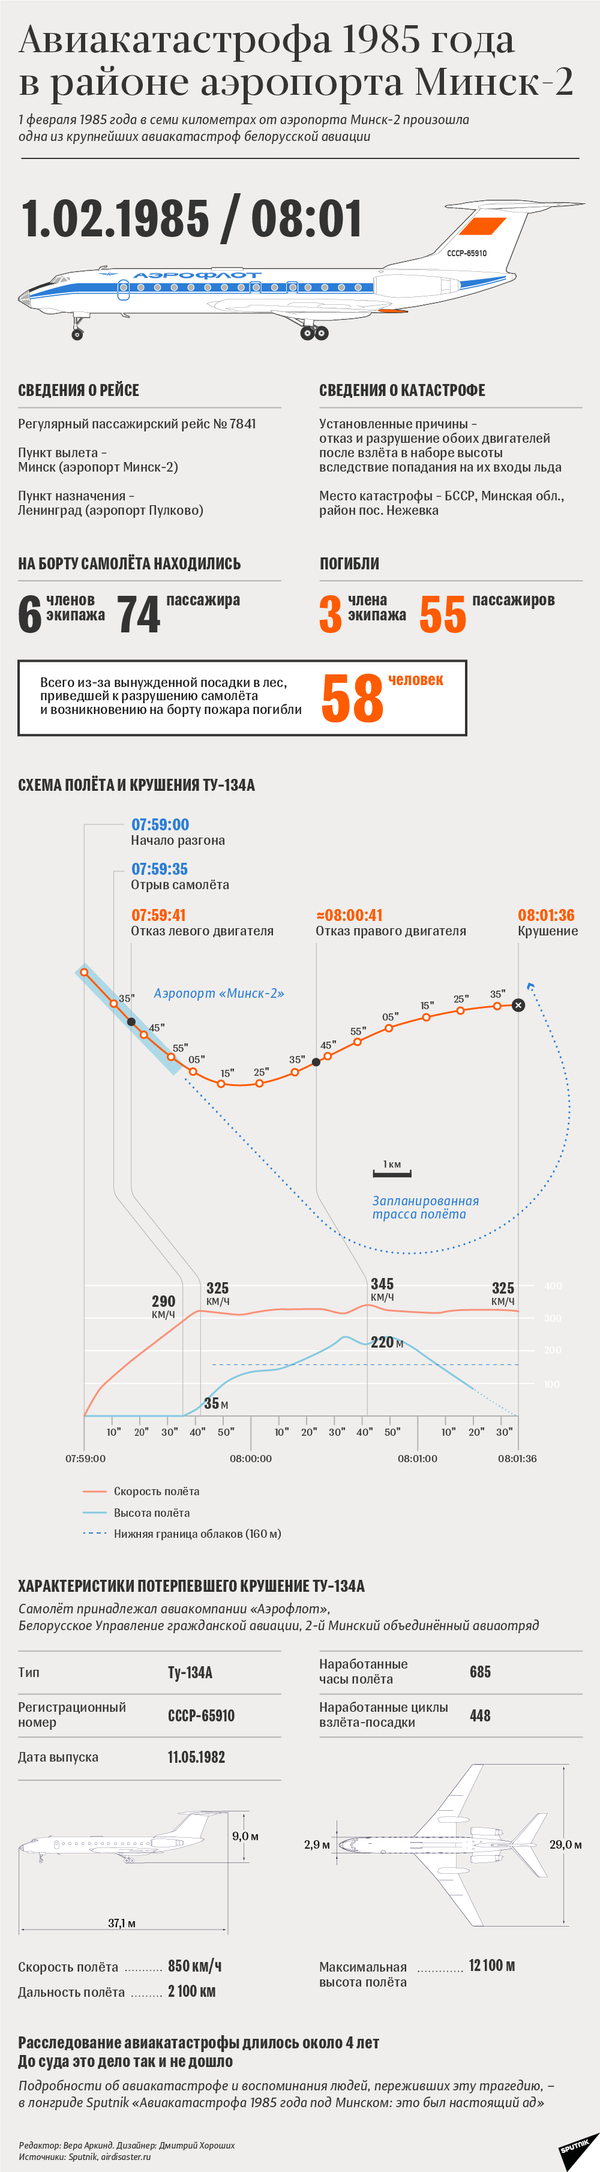 Авиакатастрофа 1985 года в районе аэропорта Минск-2 – инфографика на sputnik.by - Sputnik Беларусь